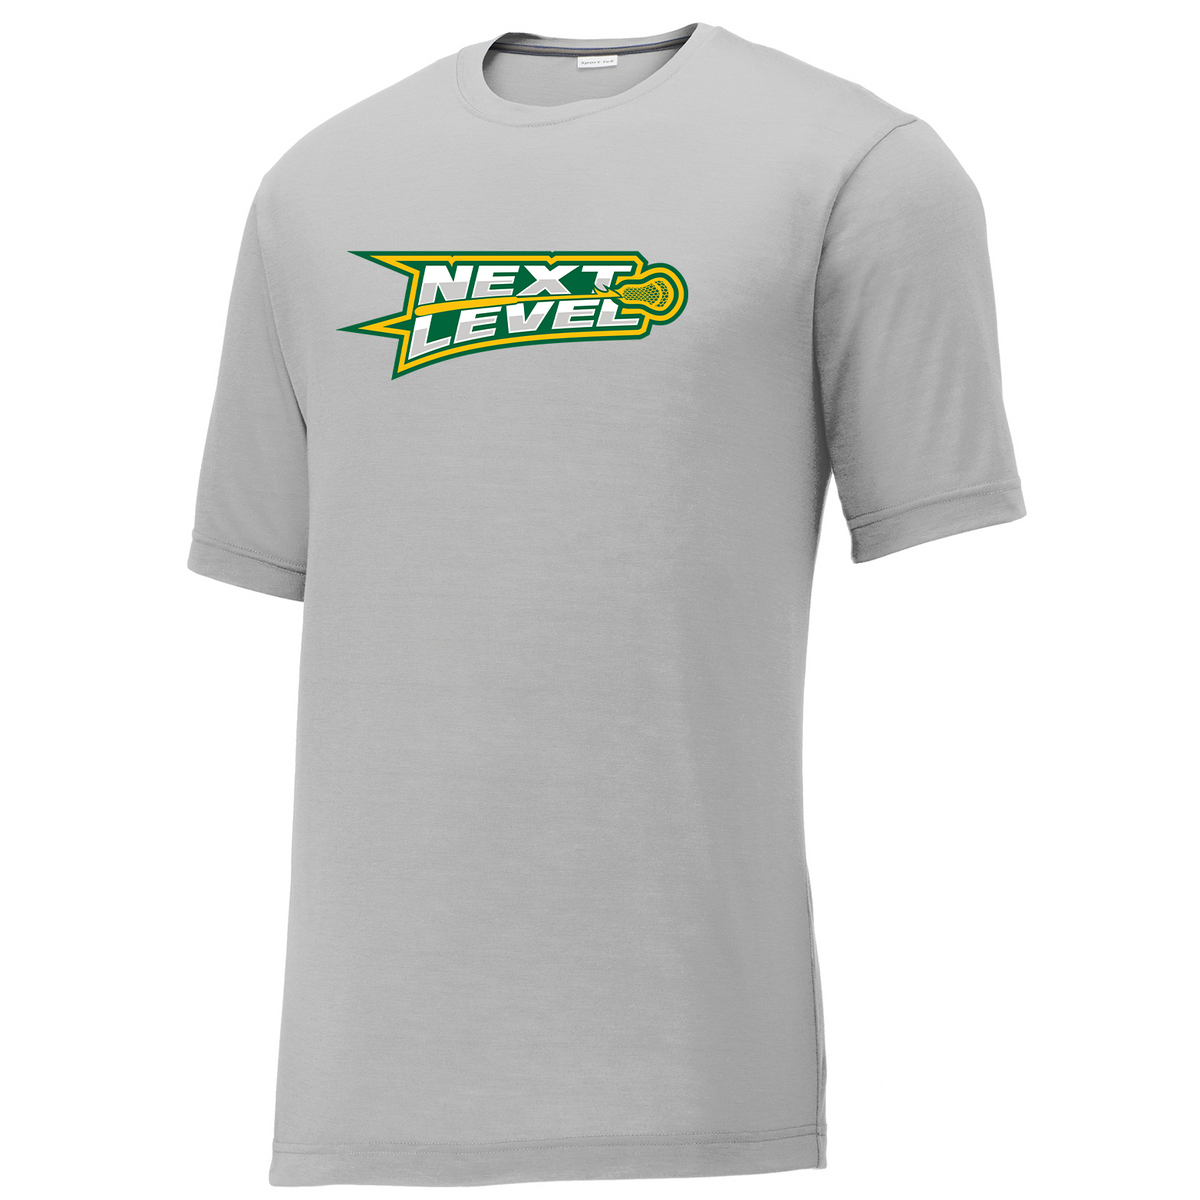 Next Level Northwest Lacrosse CottonTouch Performance T-Shirt